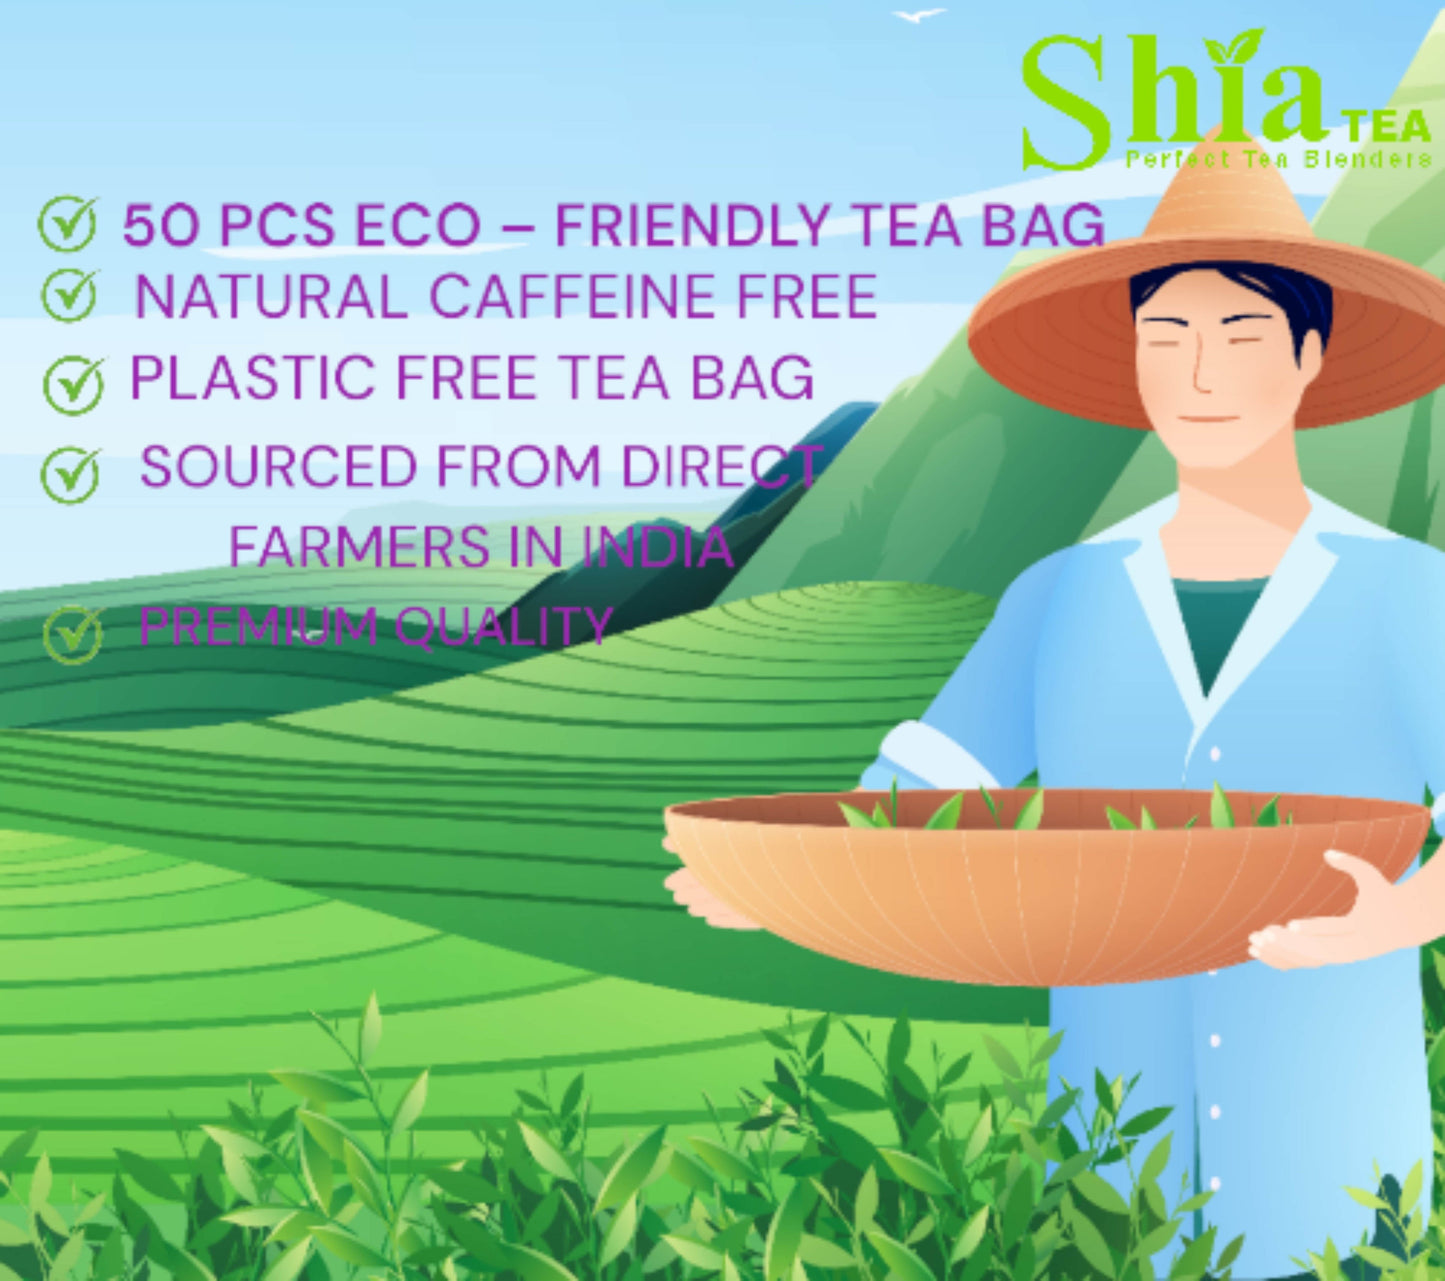 Arjun Barak herbal Tea I Eco friendly 50 pcs tea bag I caffeine free herbal